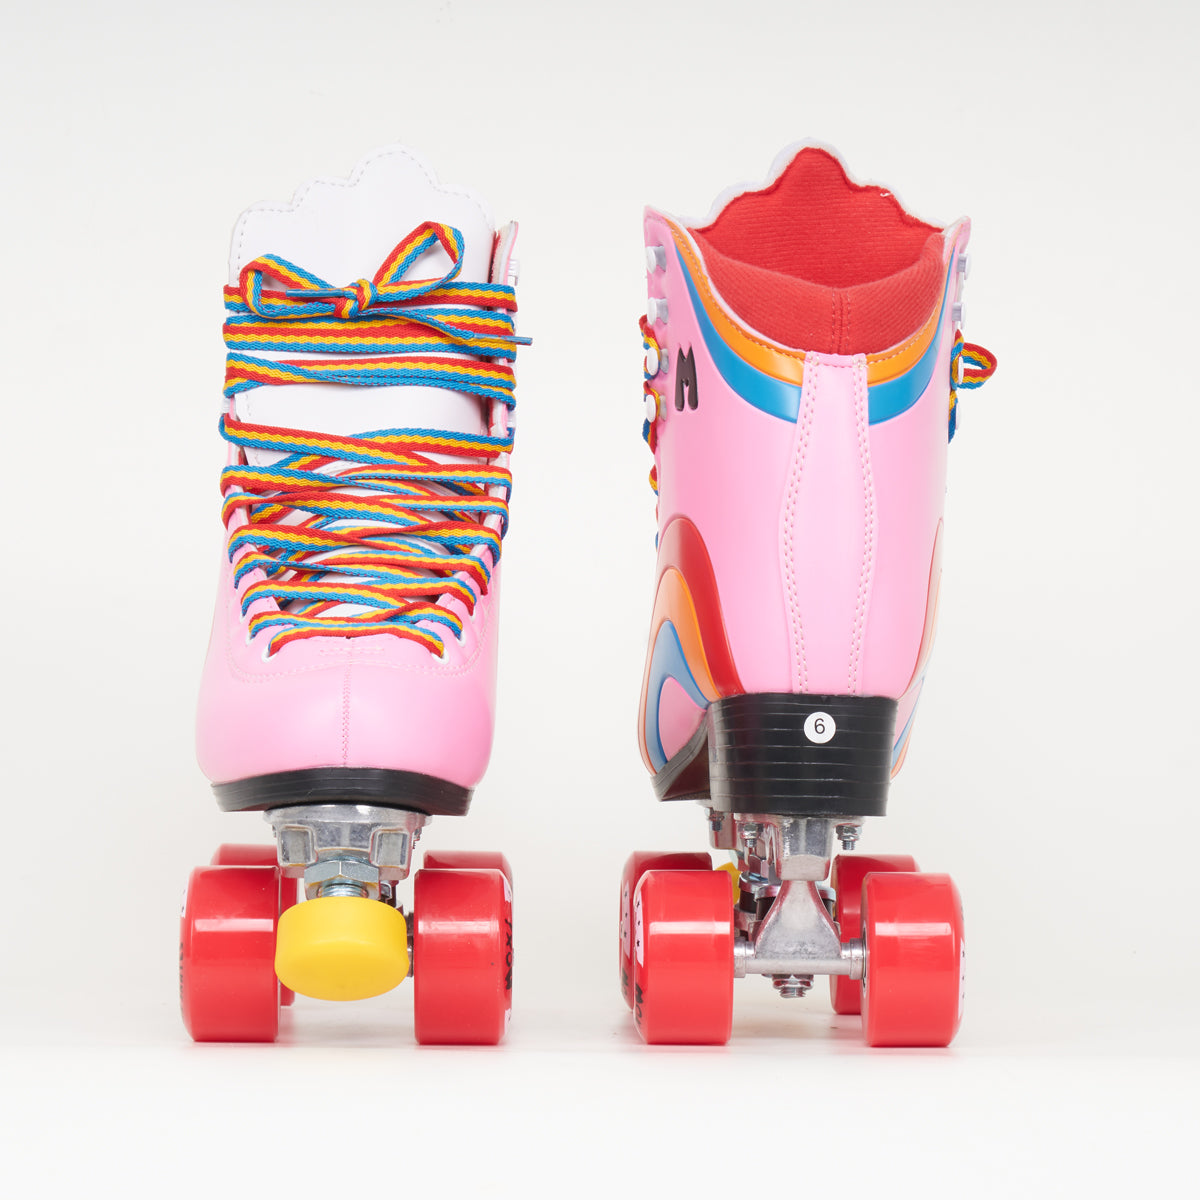 Moxi Rainbow Rider Rollerskates - Bubblegum pink